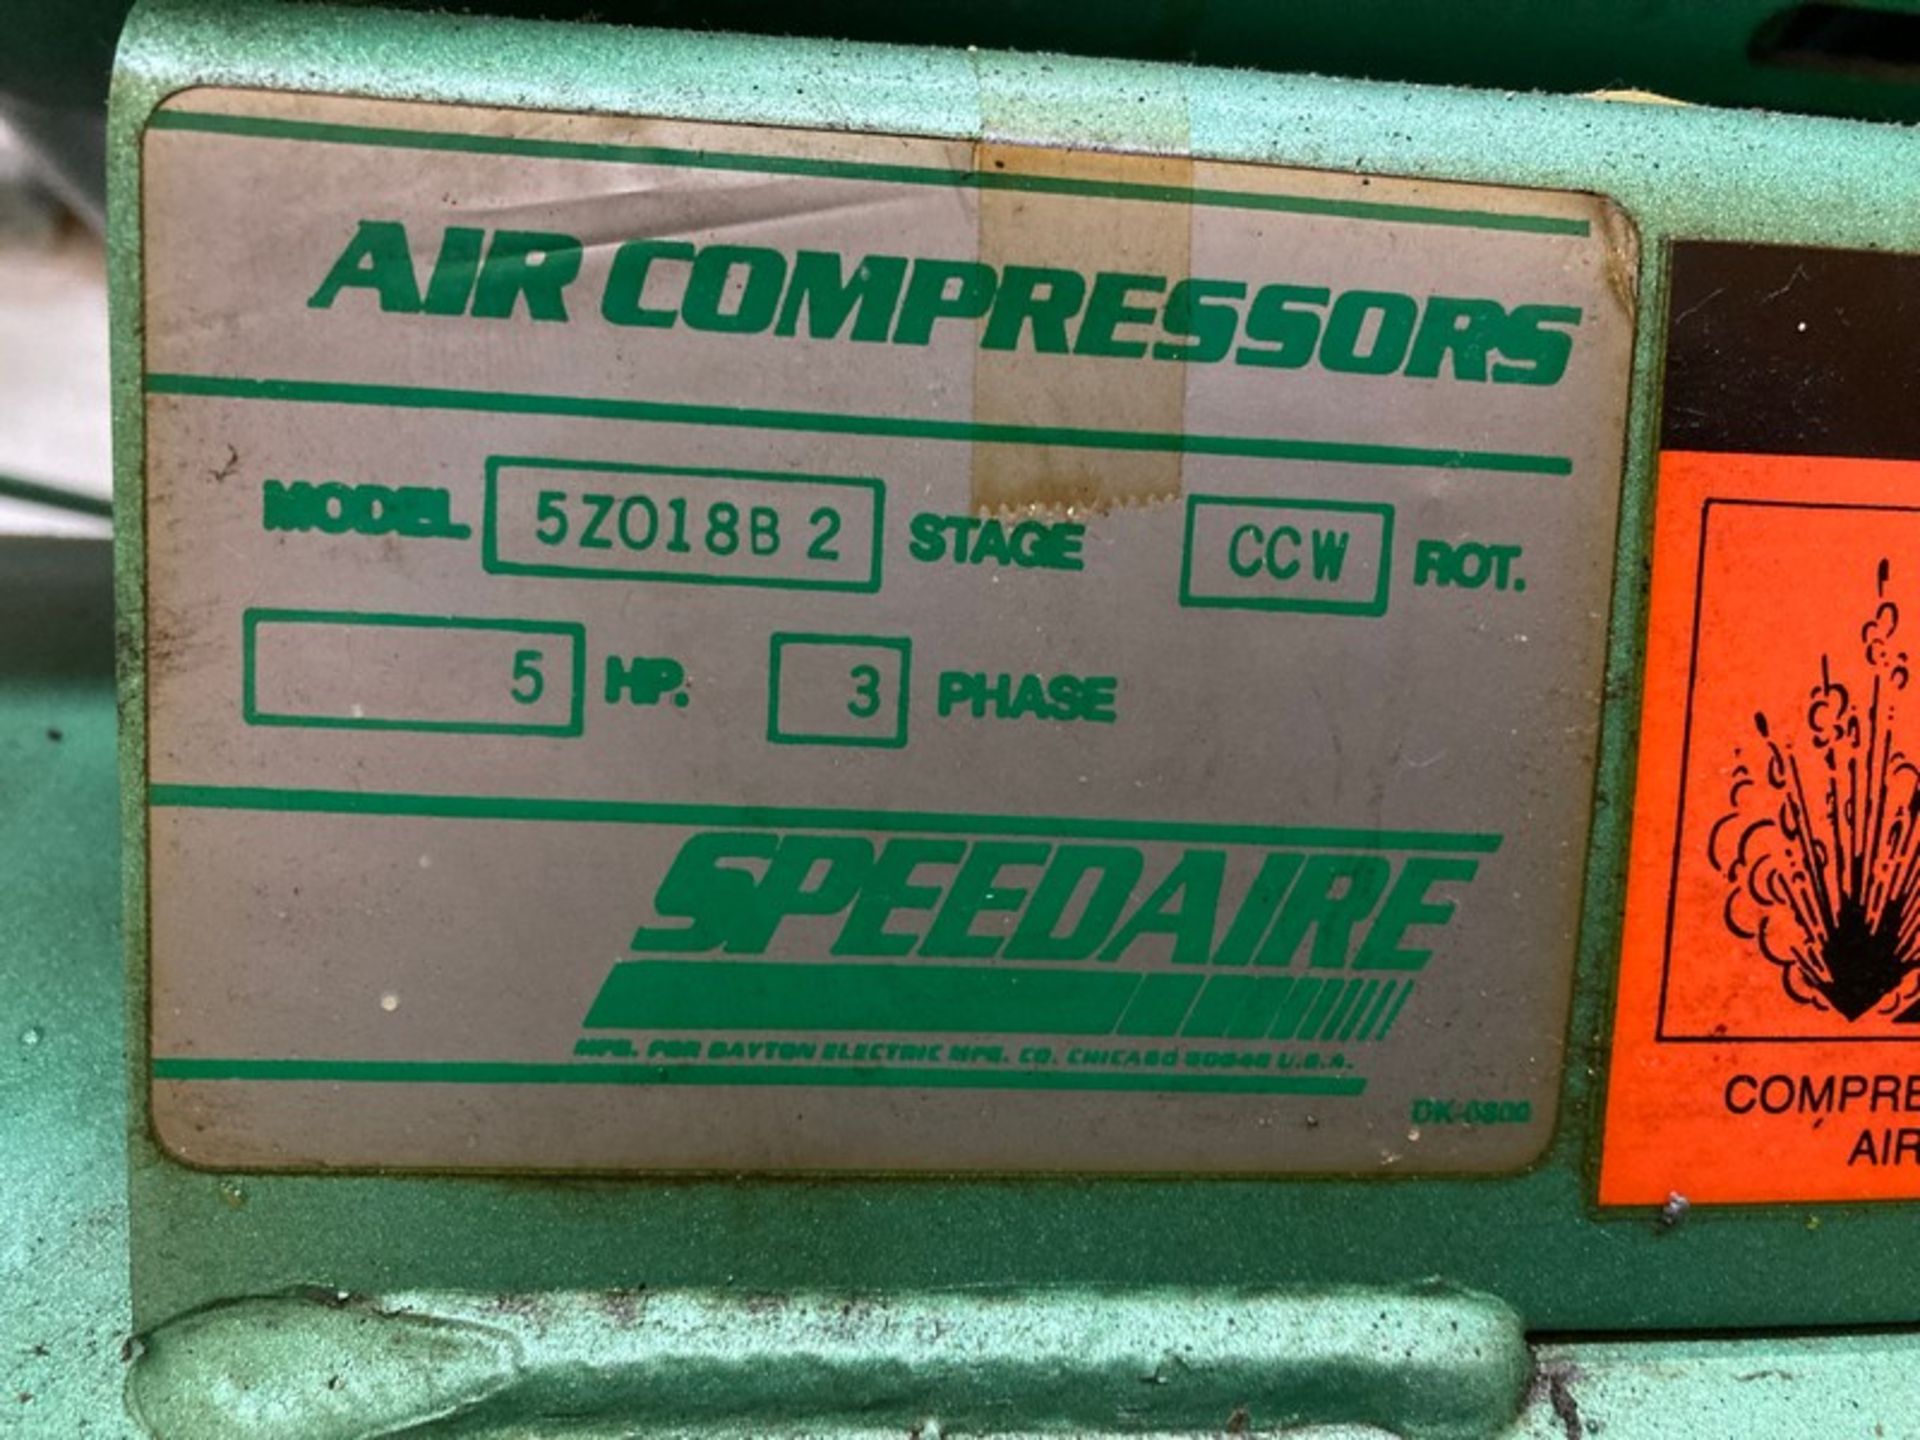 2 units - 5HP Compressor & Dryer + controls & valves - one(10 speedair Direct Drive Air Compressor - Image 5 of 7